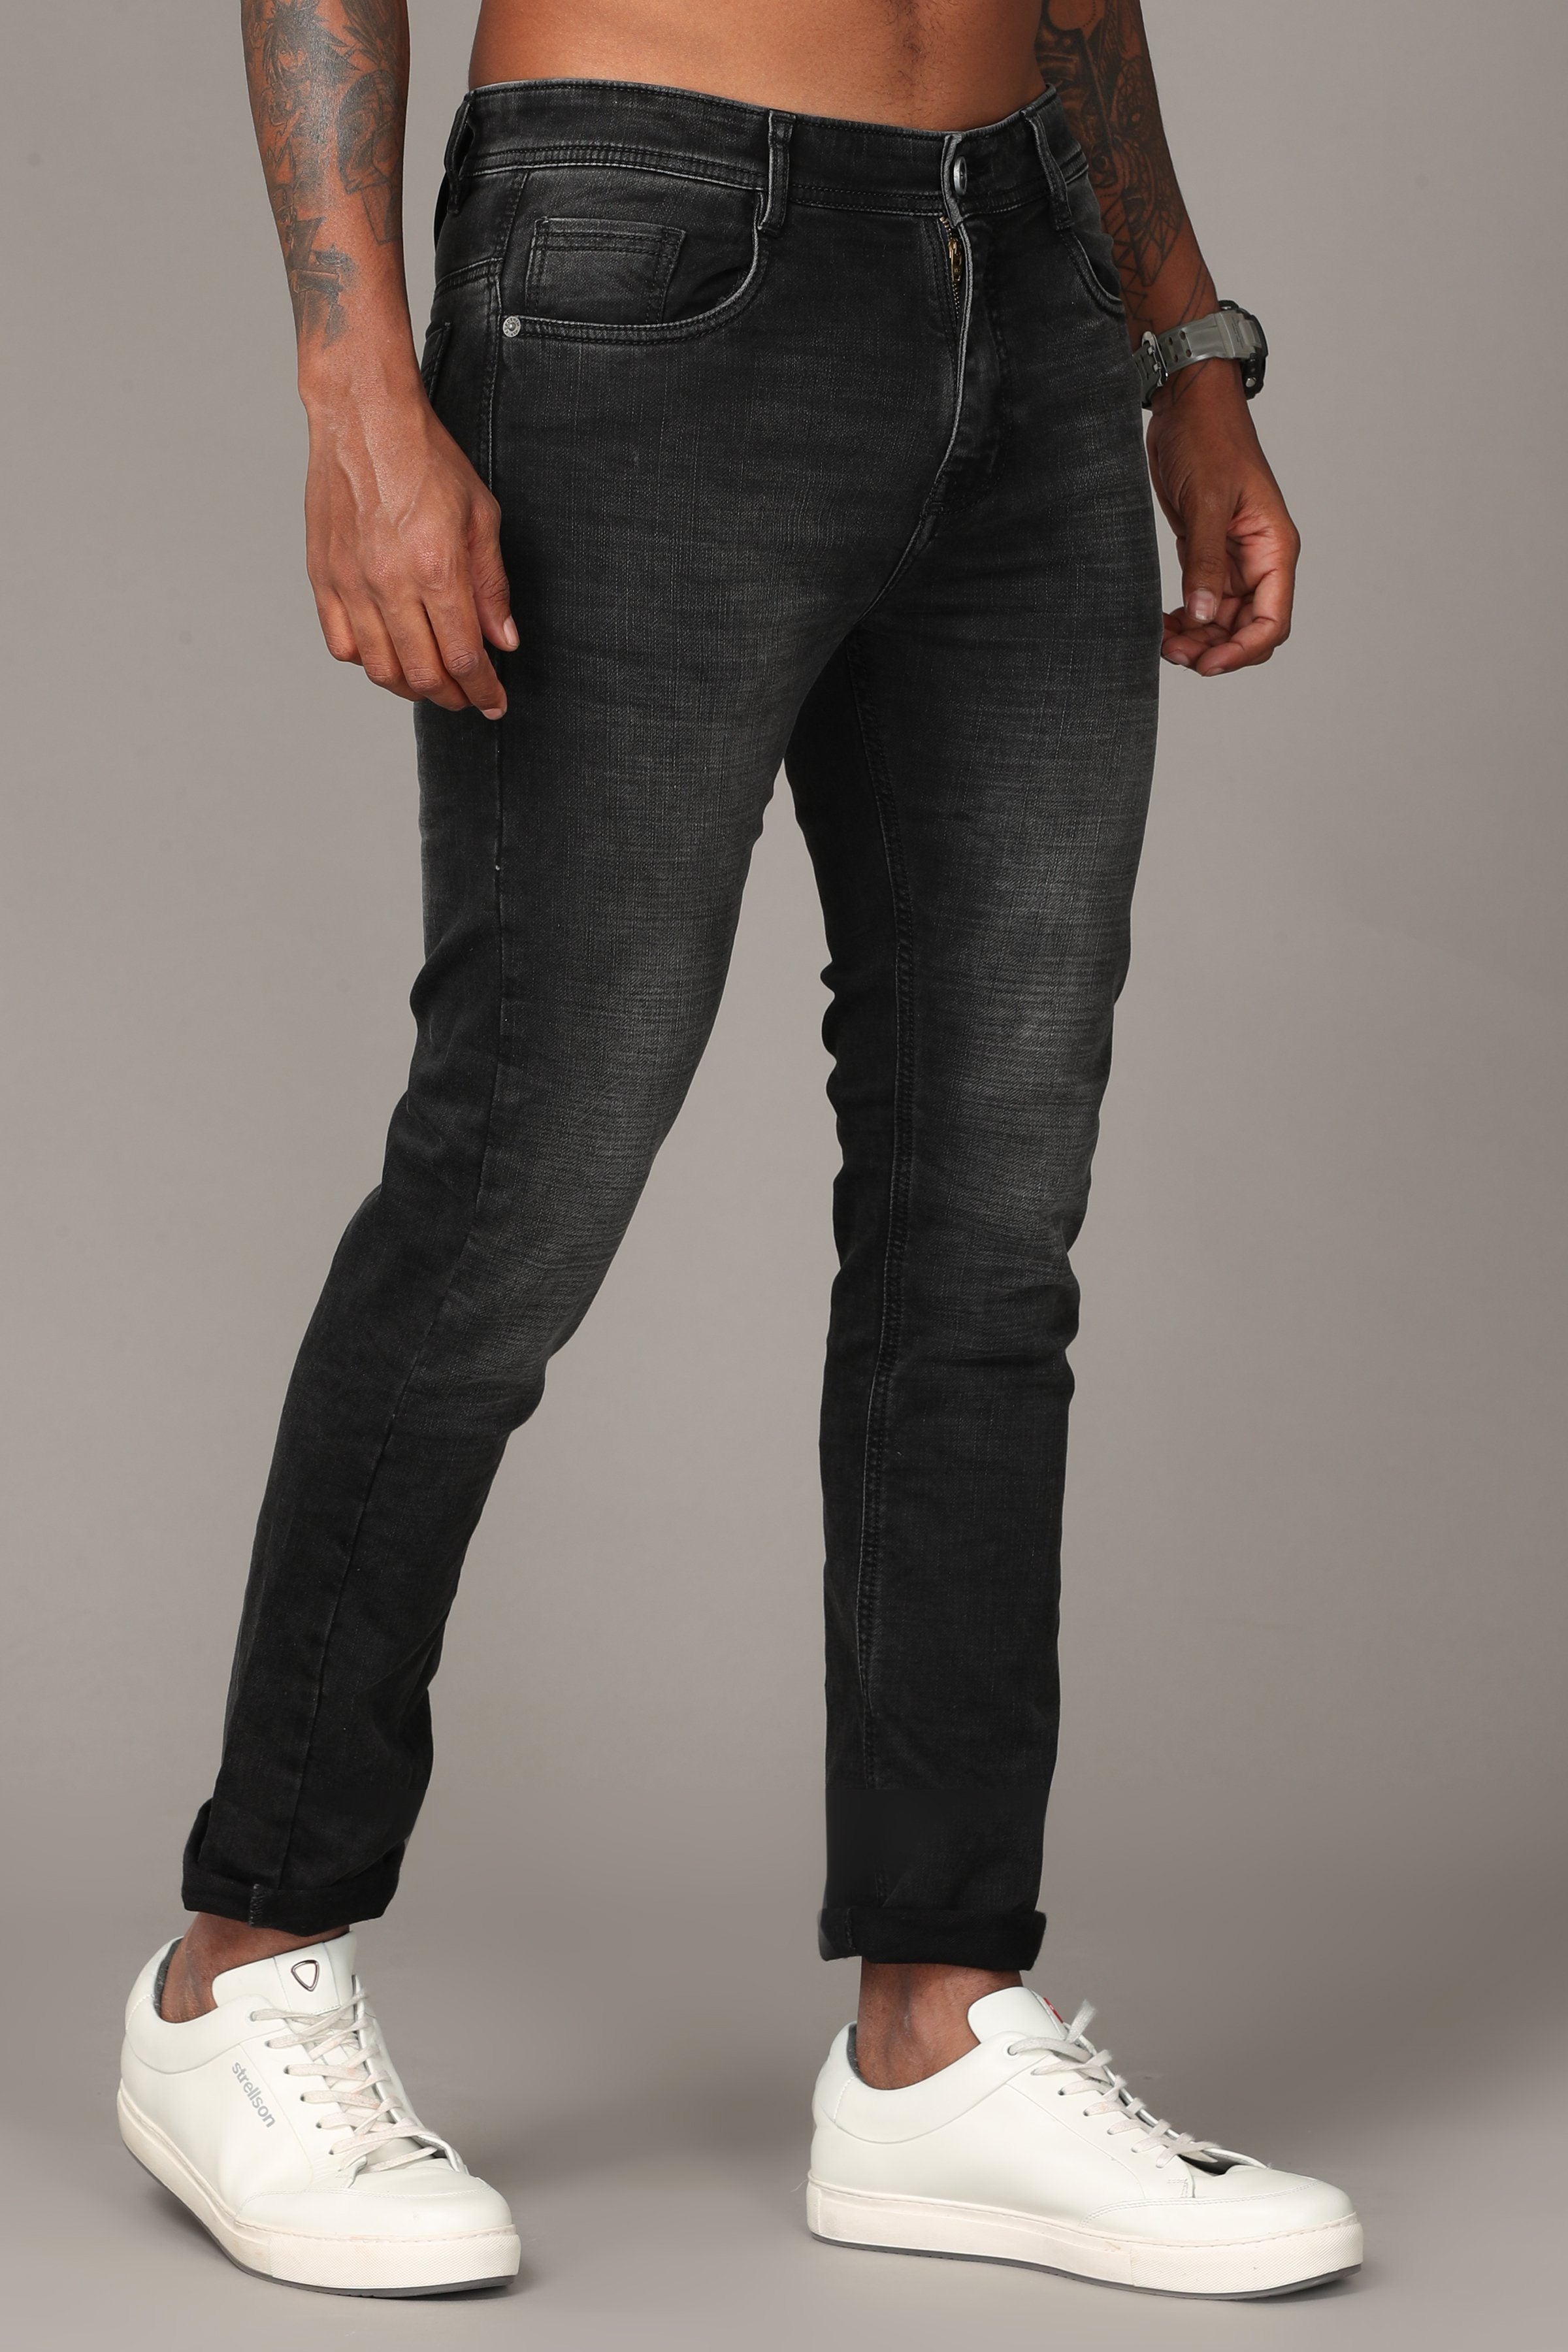 Spykar Jeans  Buy Spykar Carbon Black Cotton Loose Fit Regular Length Jeans  For Men renato Online  Nykaa Fashion